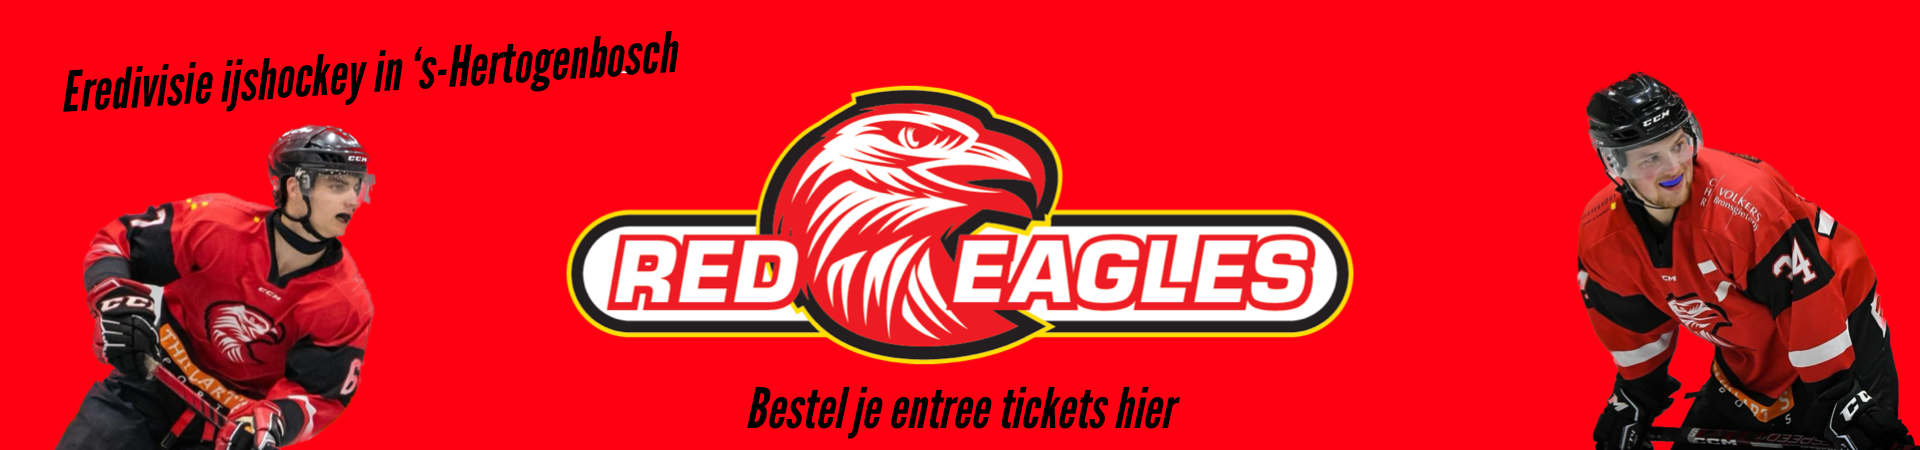 Red Eagles Den Bosch tickets